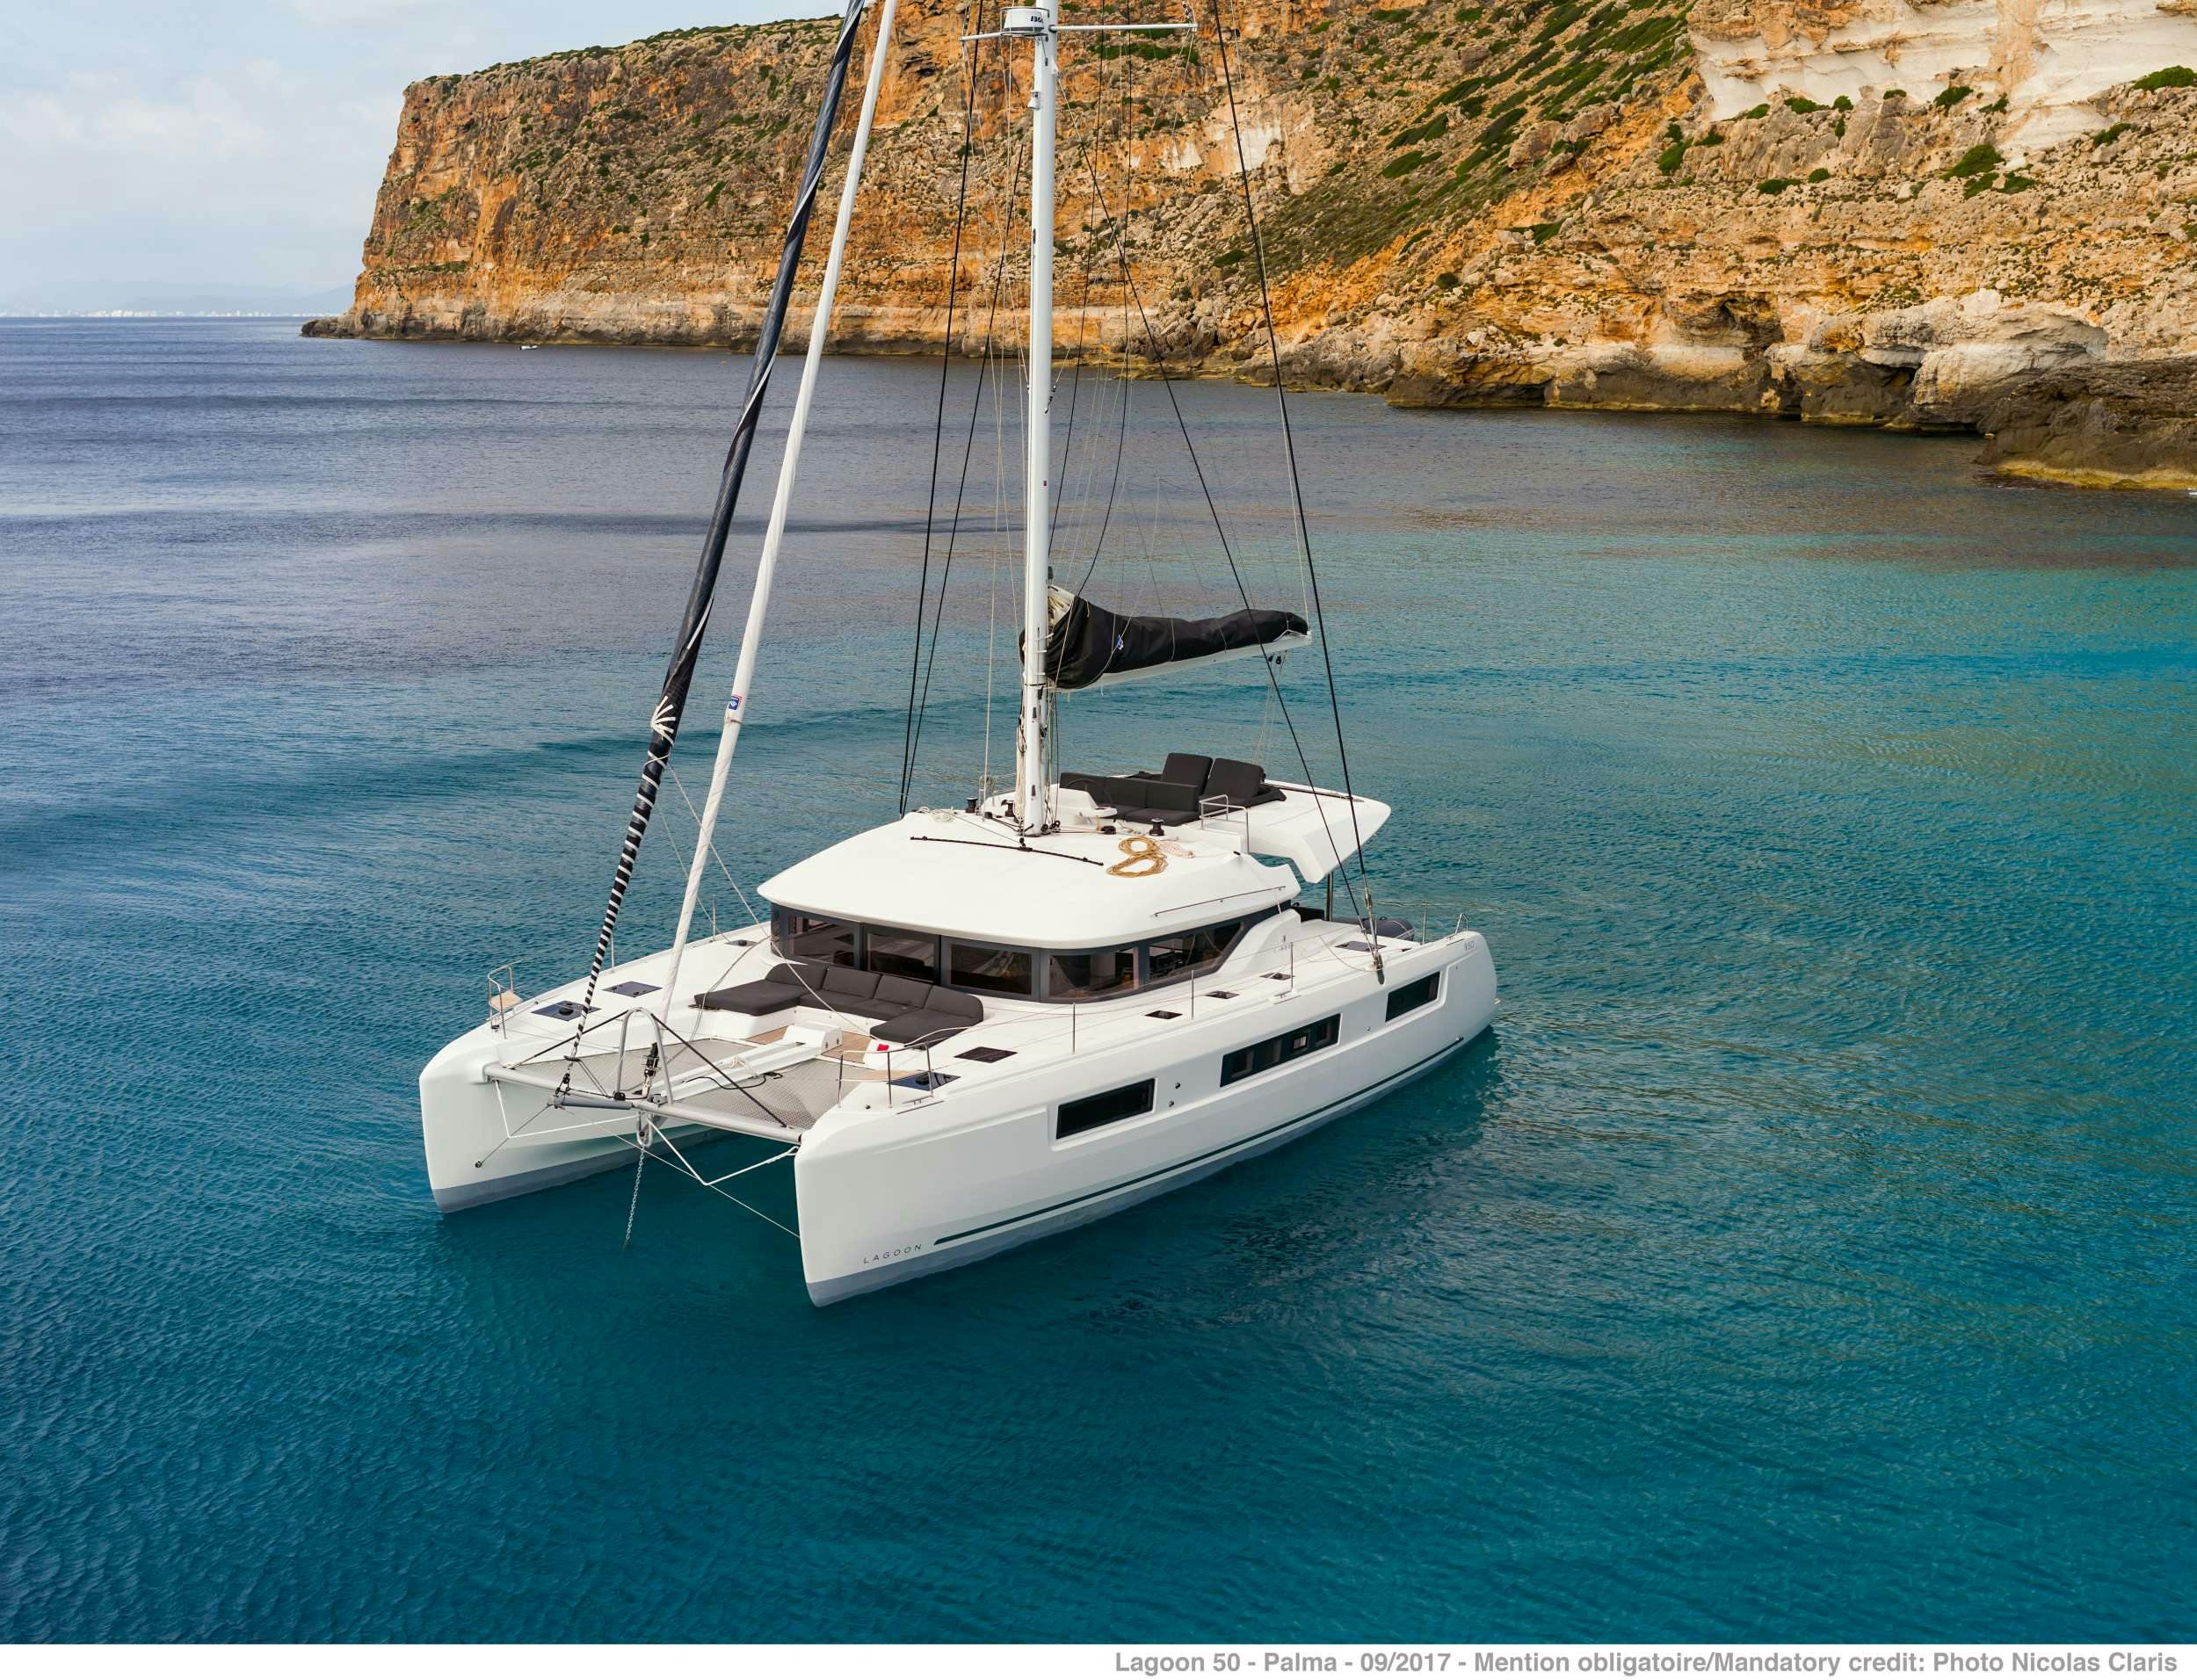 ONEIDA 2 - Yacht Charter Majorca & Boat hire in Greece 1